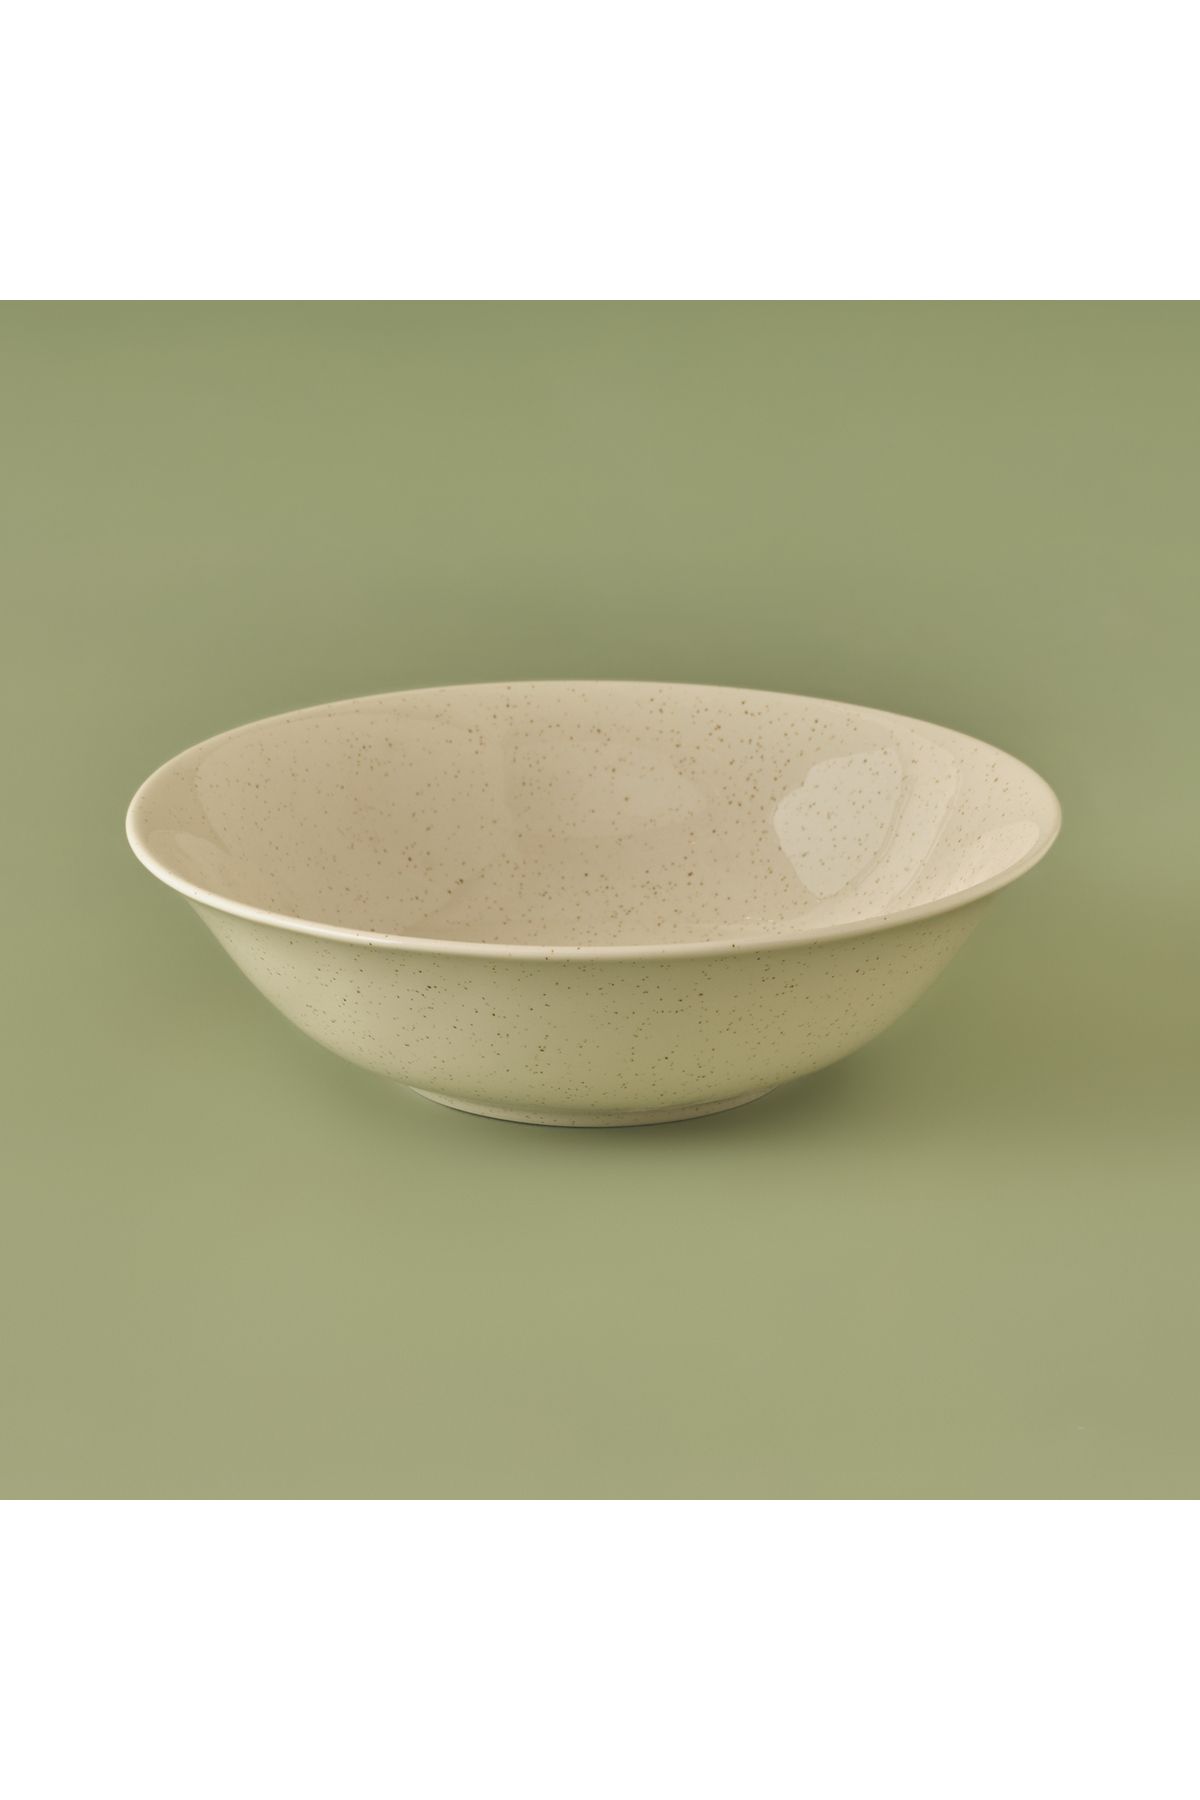 Bella Maison Sand Porselen Salata Kasesi Krem (23 cm)